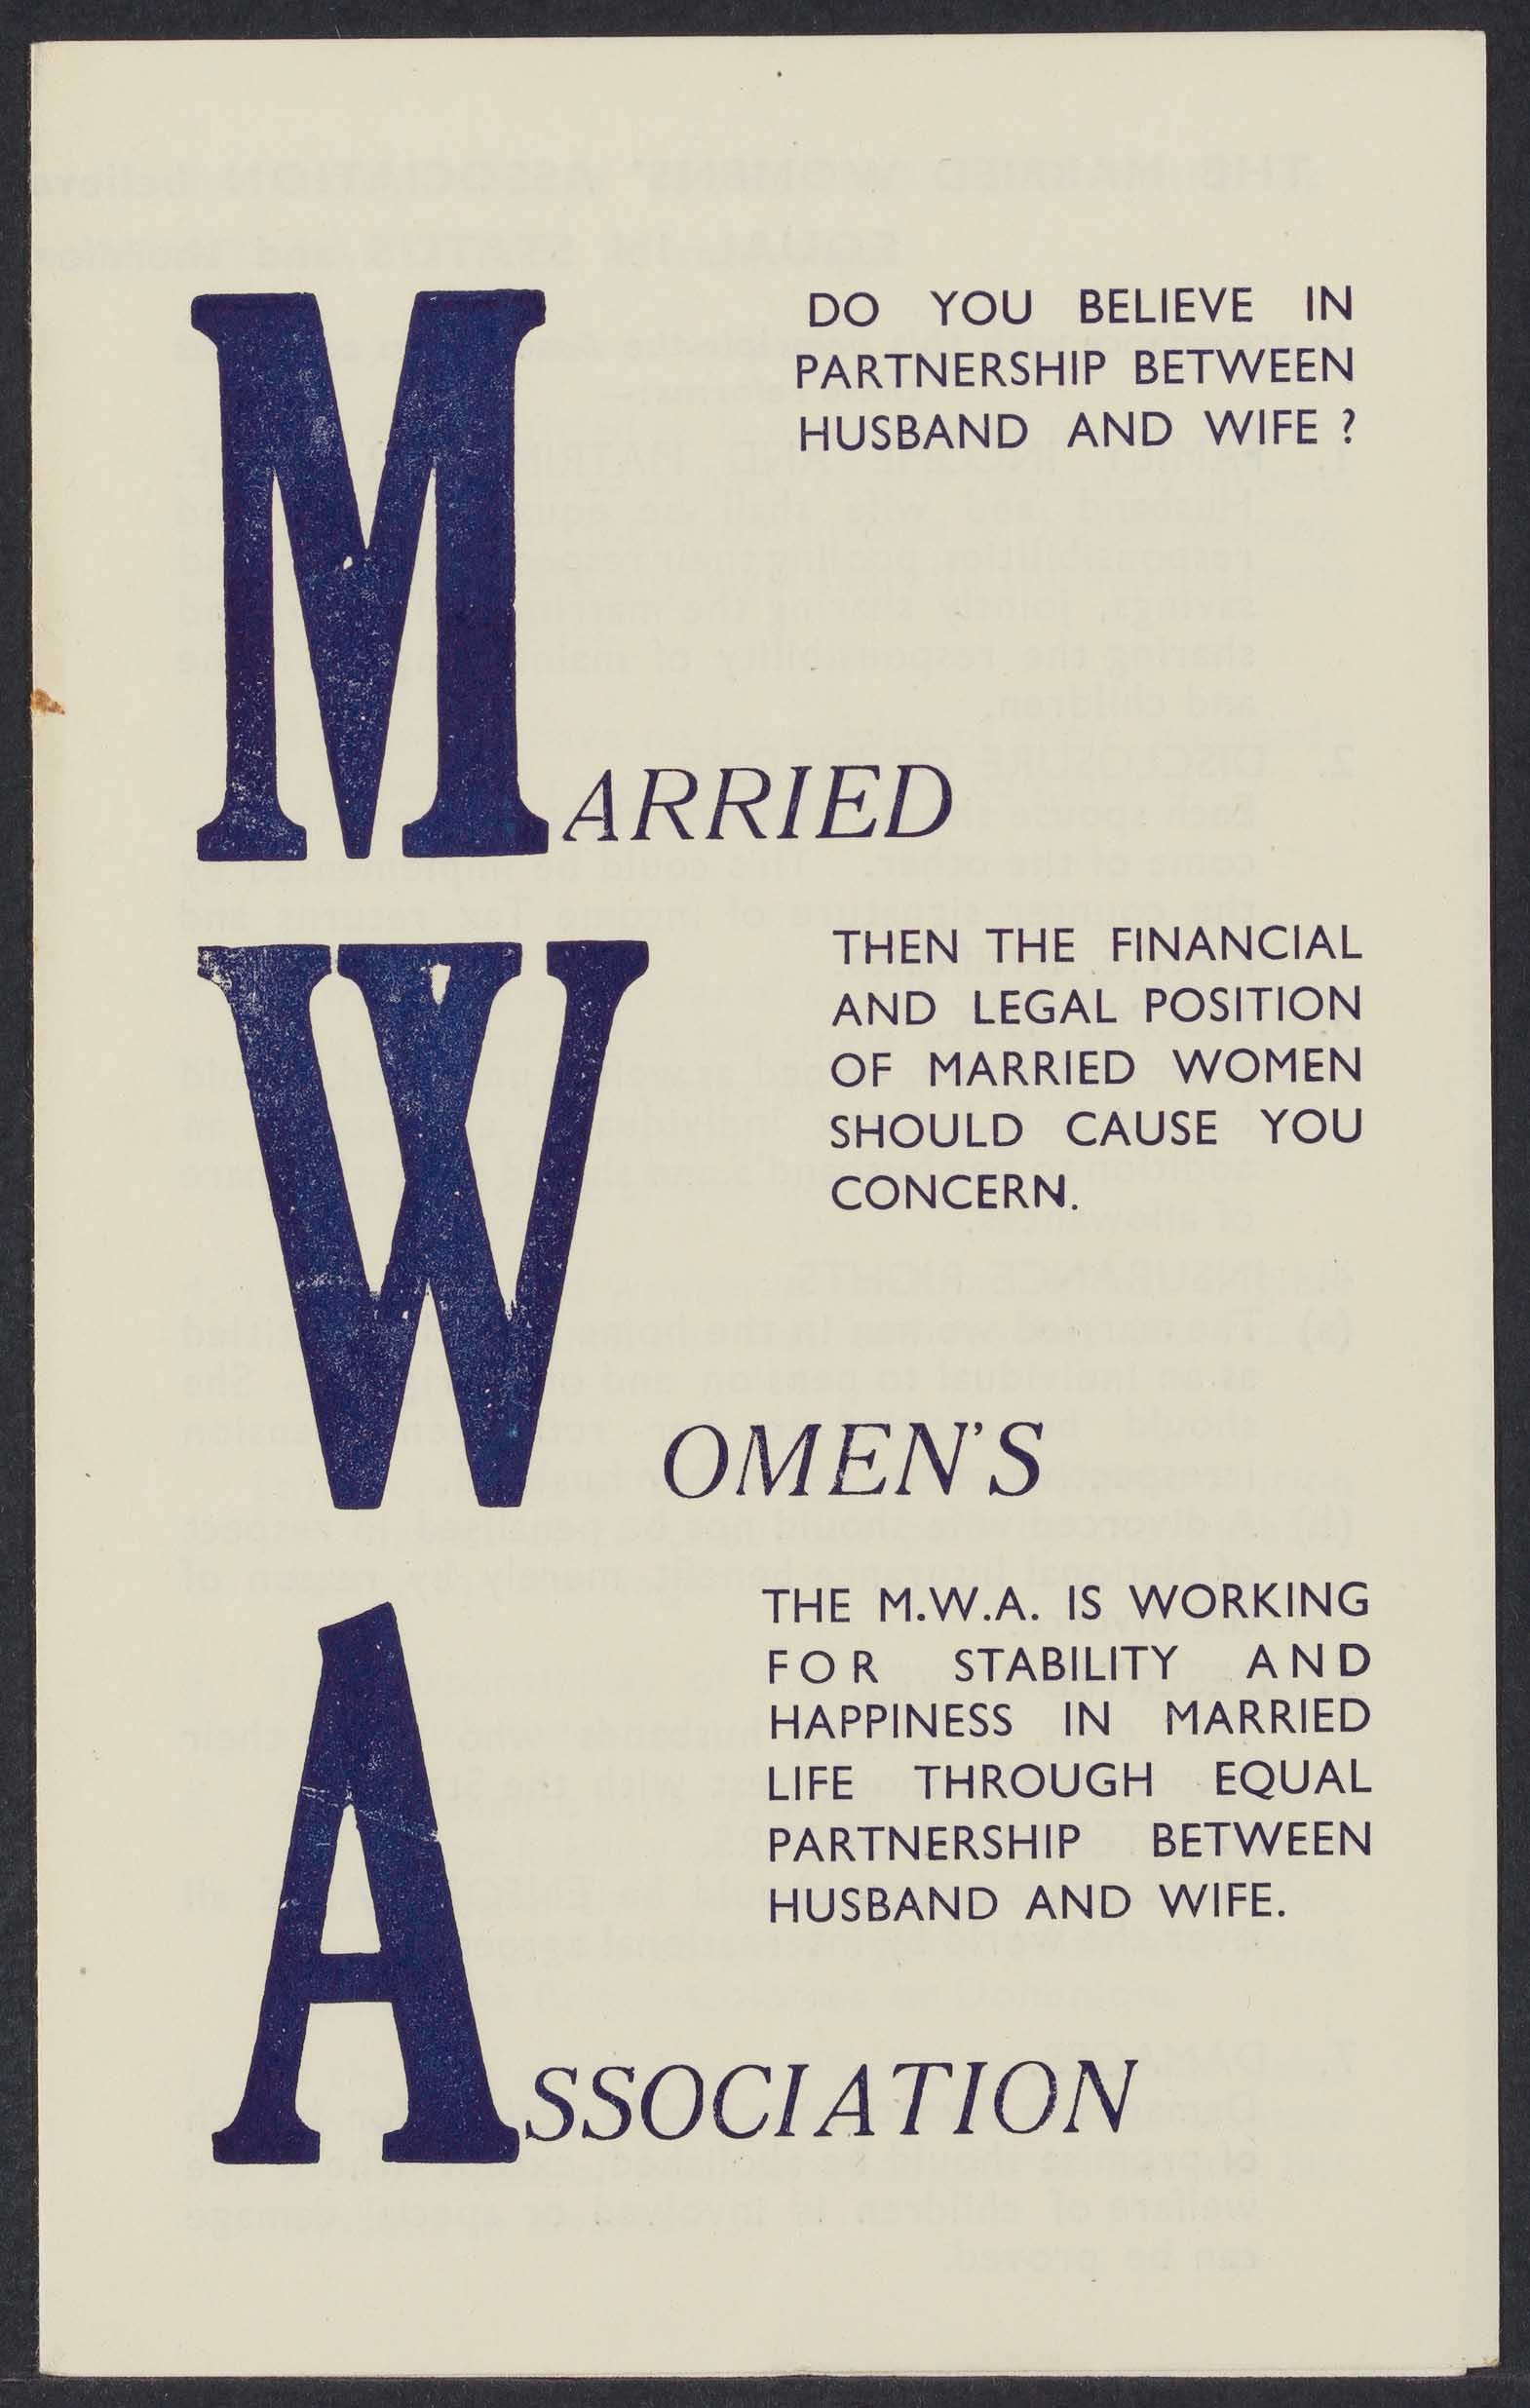 The Married Women's Association